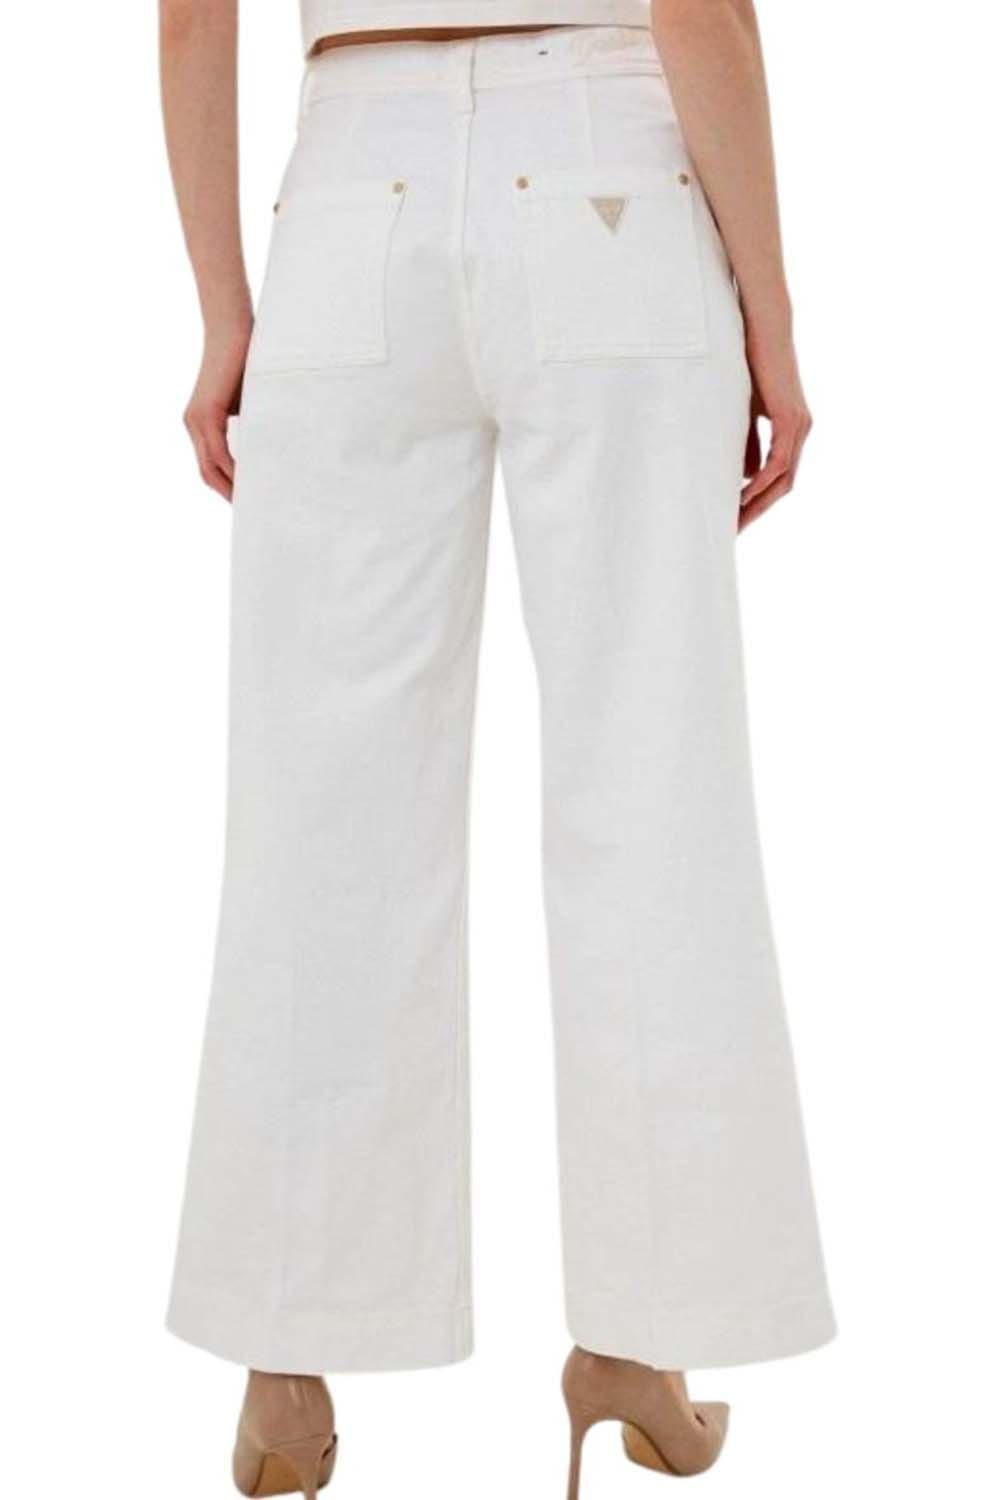 Guess Dakota High Wide Cropped White Jeans